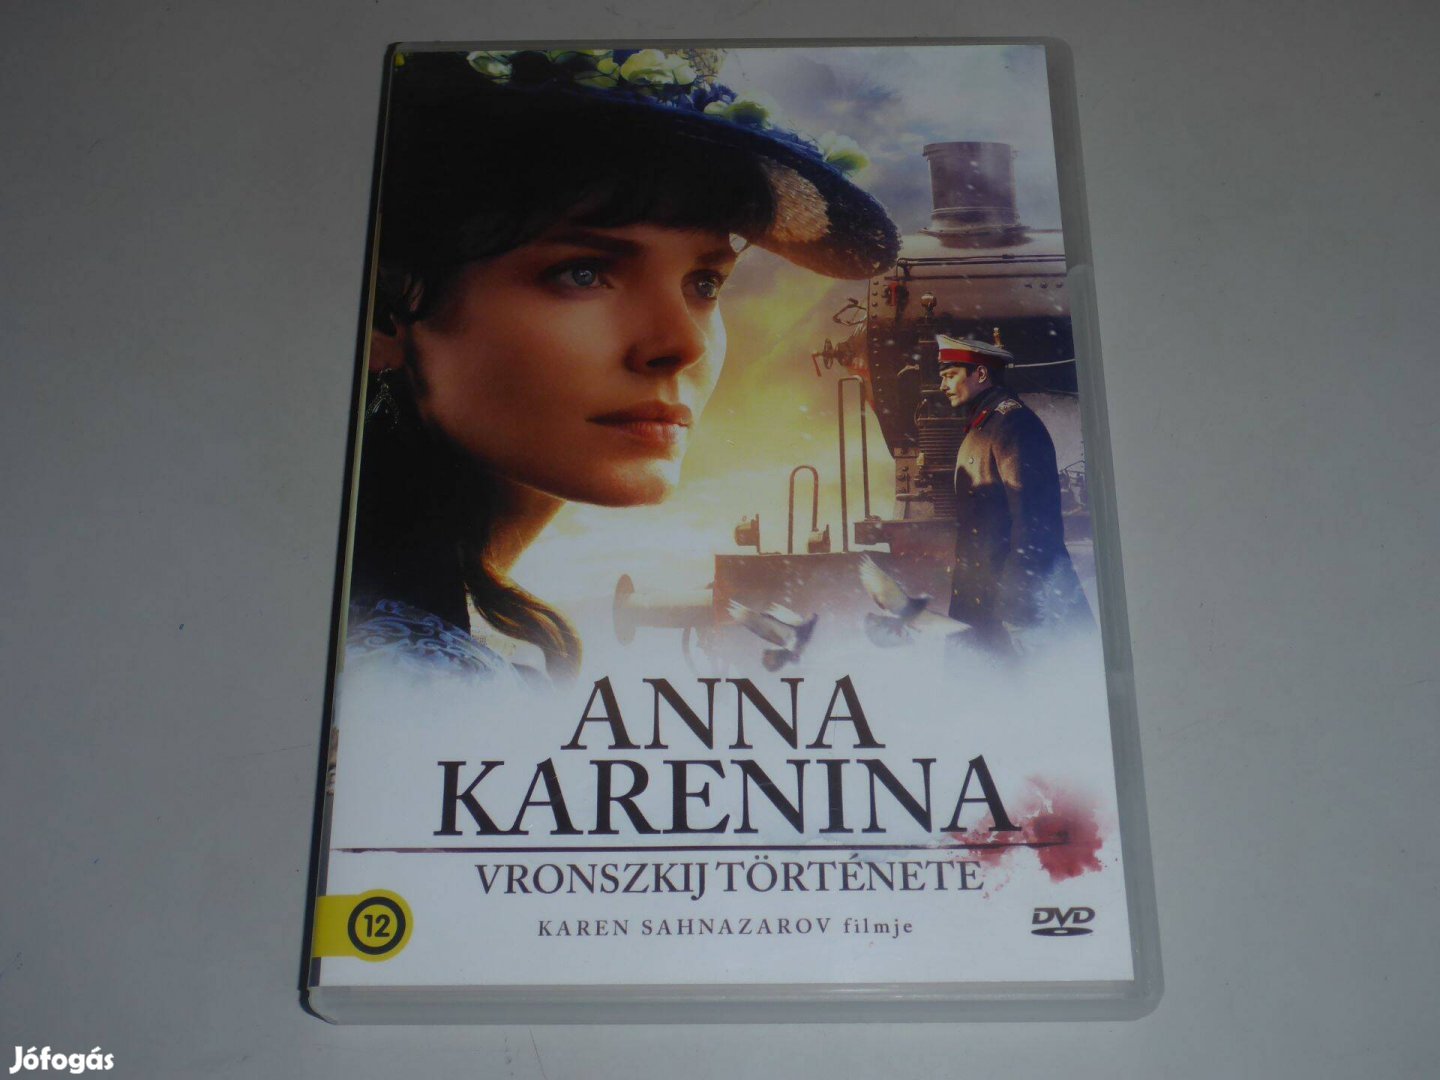 Anna Karenina - Vronszkij története DVD film *